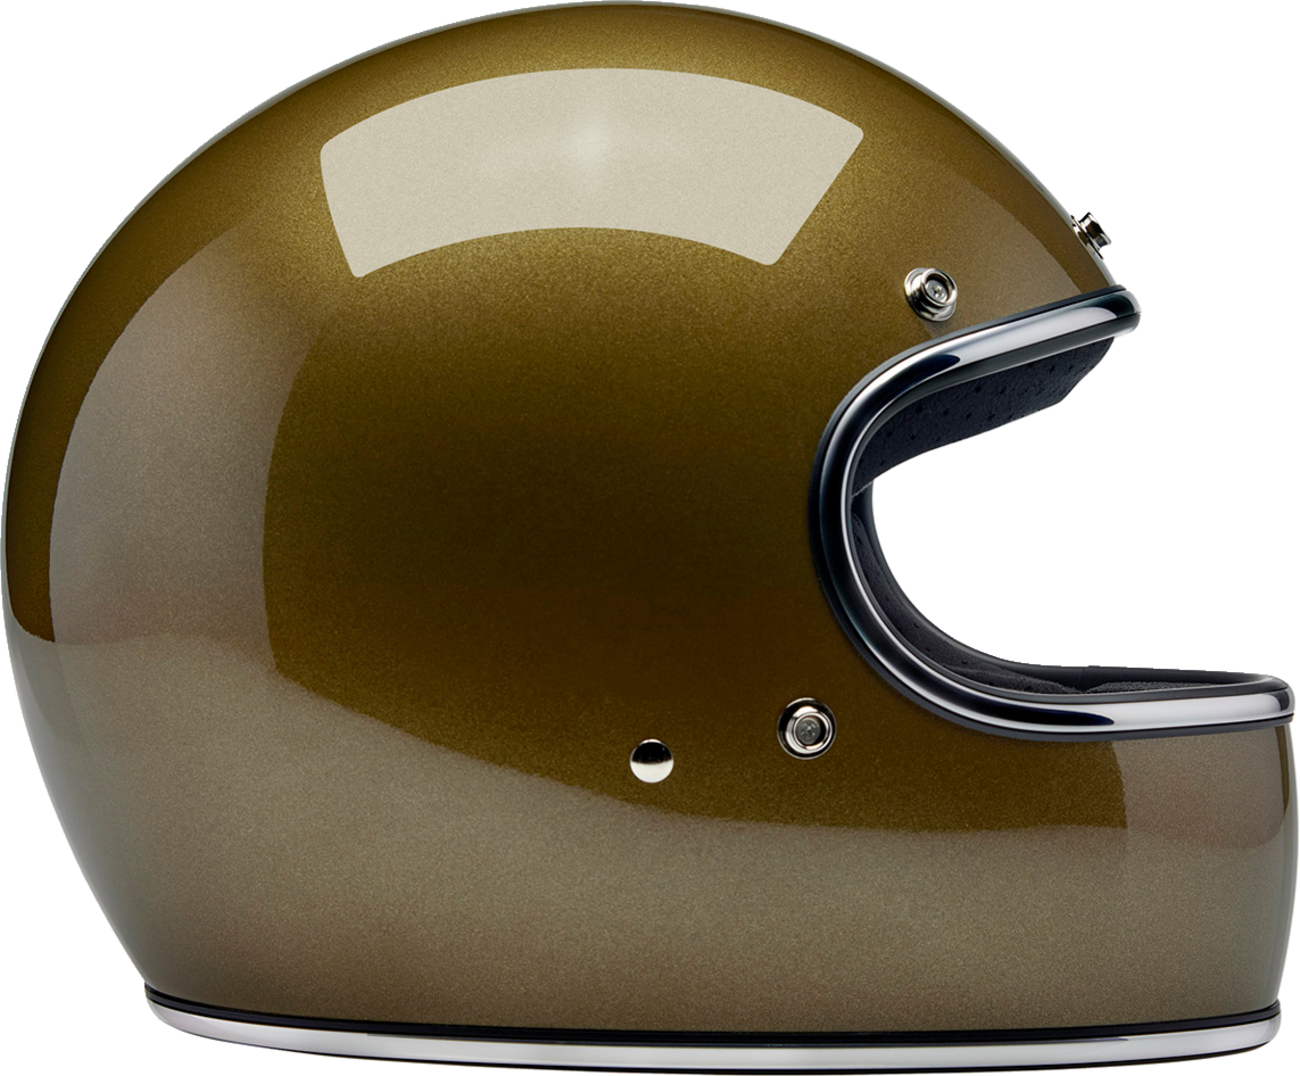 BILTWELL Gringo Helmet - Ugly Gold - XS 1002-363-501